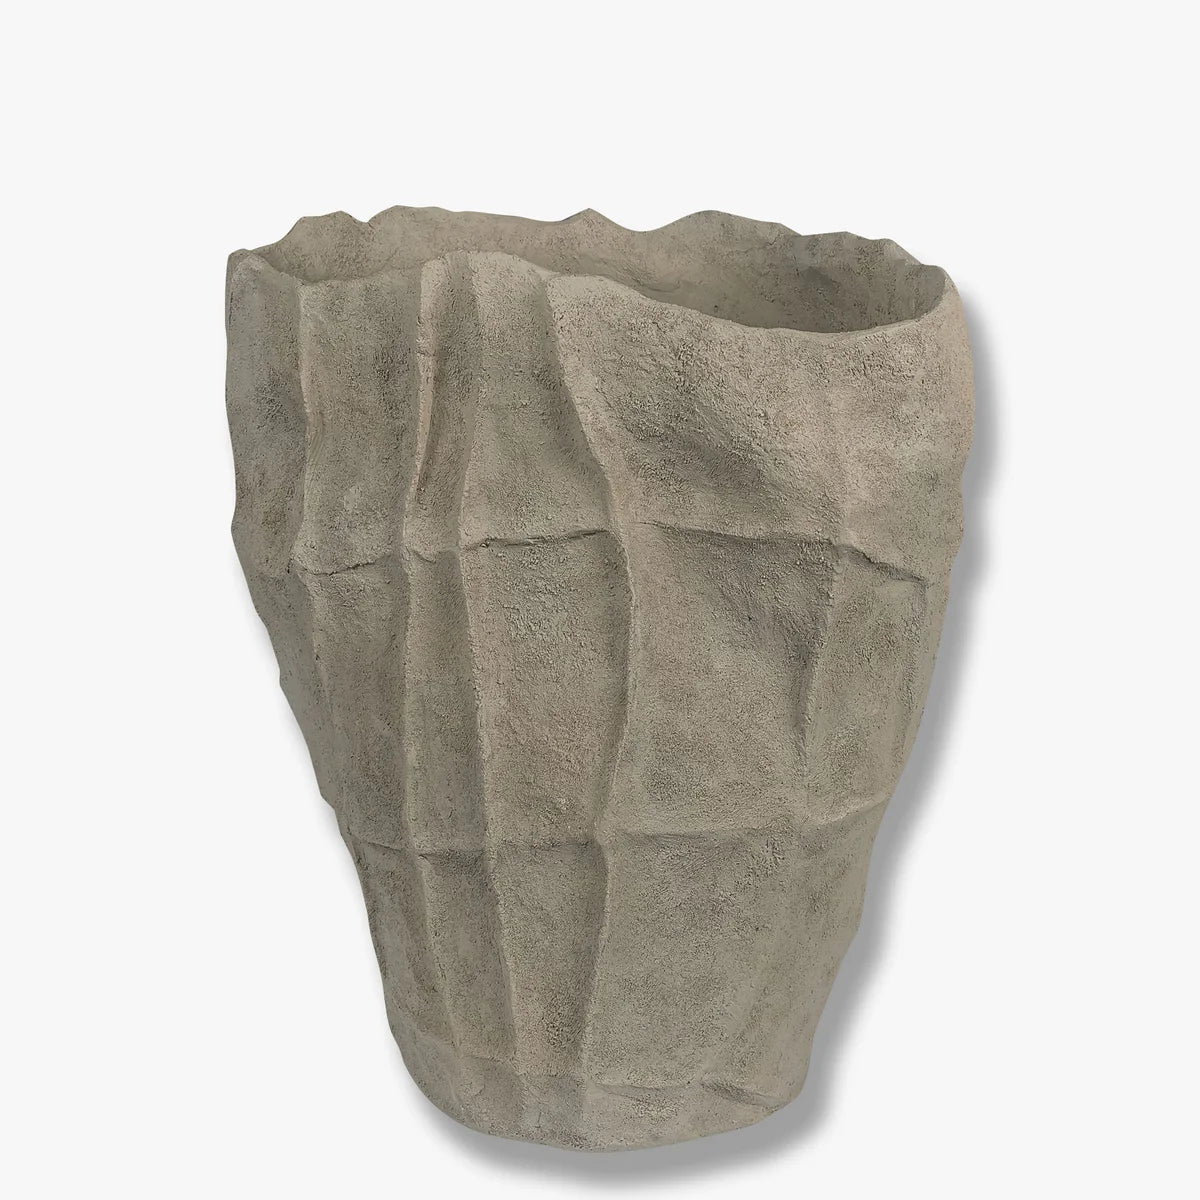 HINTSDECO Βάζο Διακοσμητικό Βάζο Artistic Ρητίνη Πέτρας Μπεζ W30 x L18 x H33,5 cm Mette Ditmer